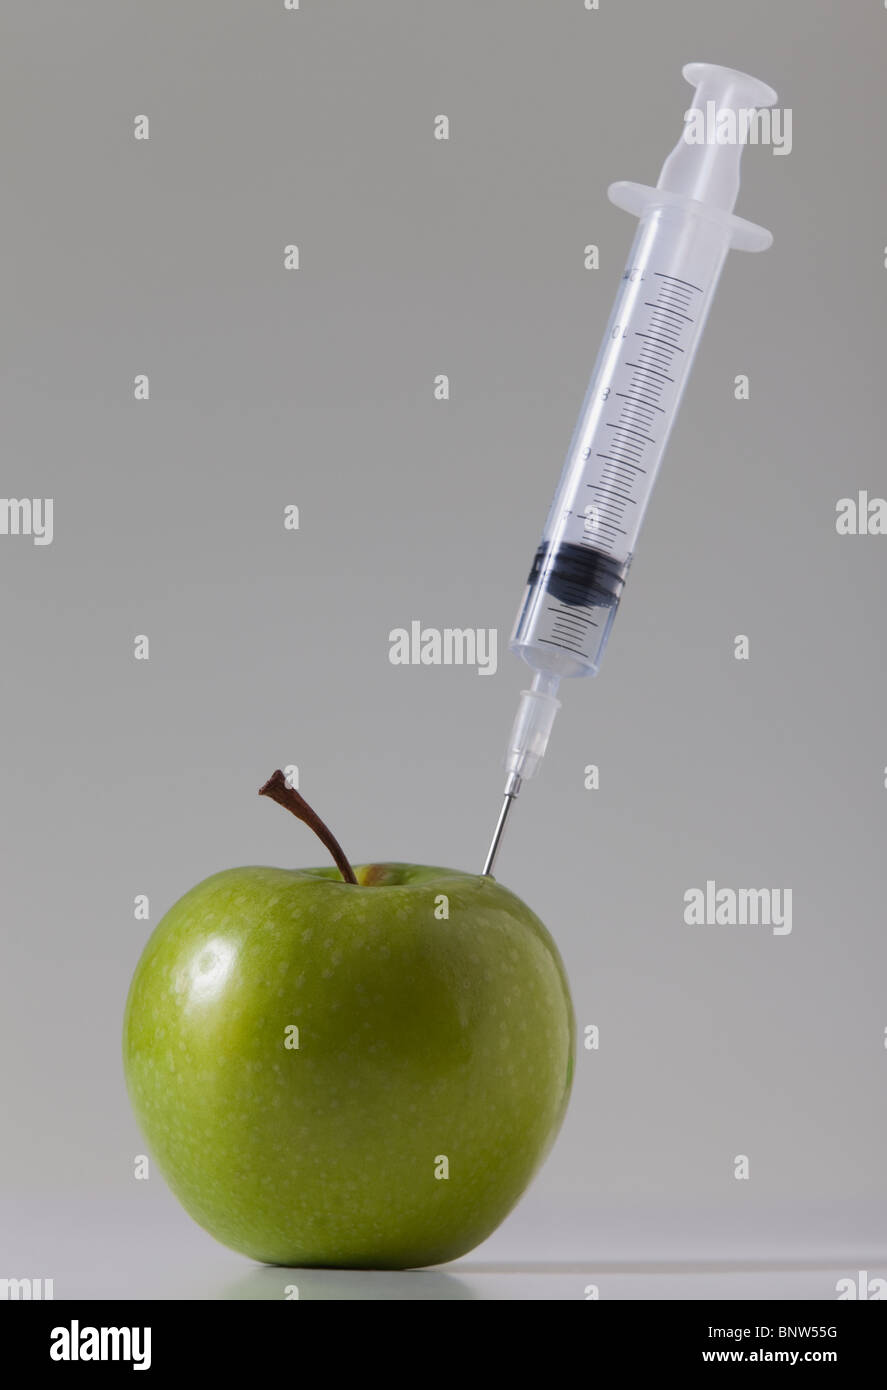 Syringe in apple Stock Photo